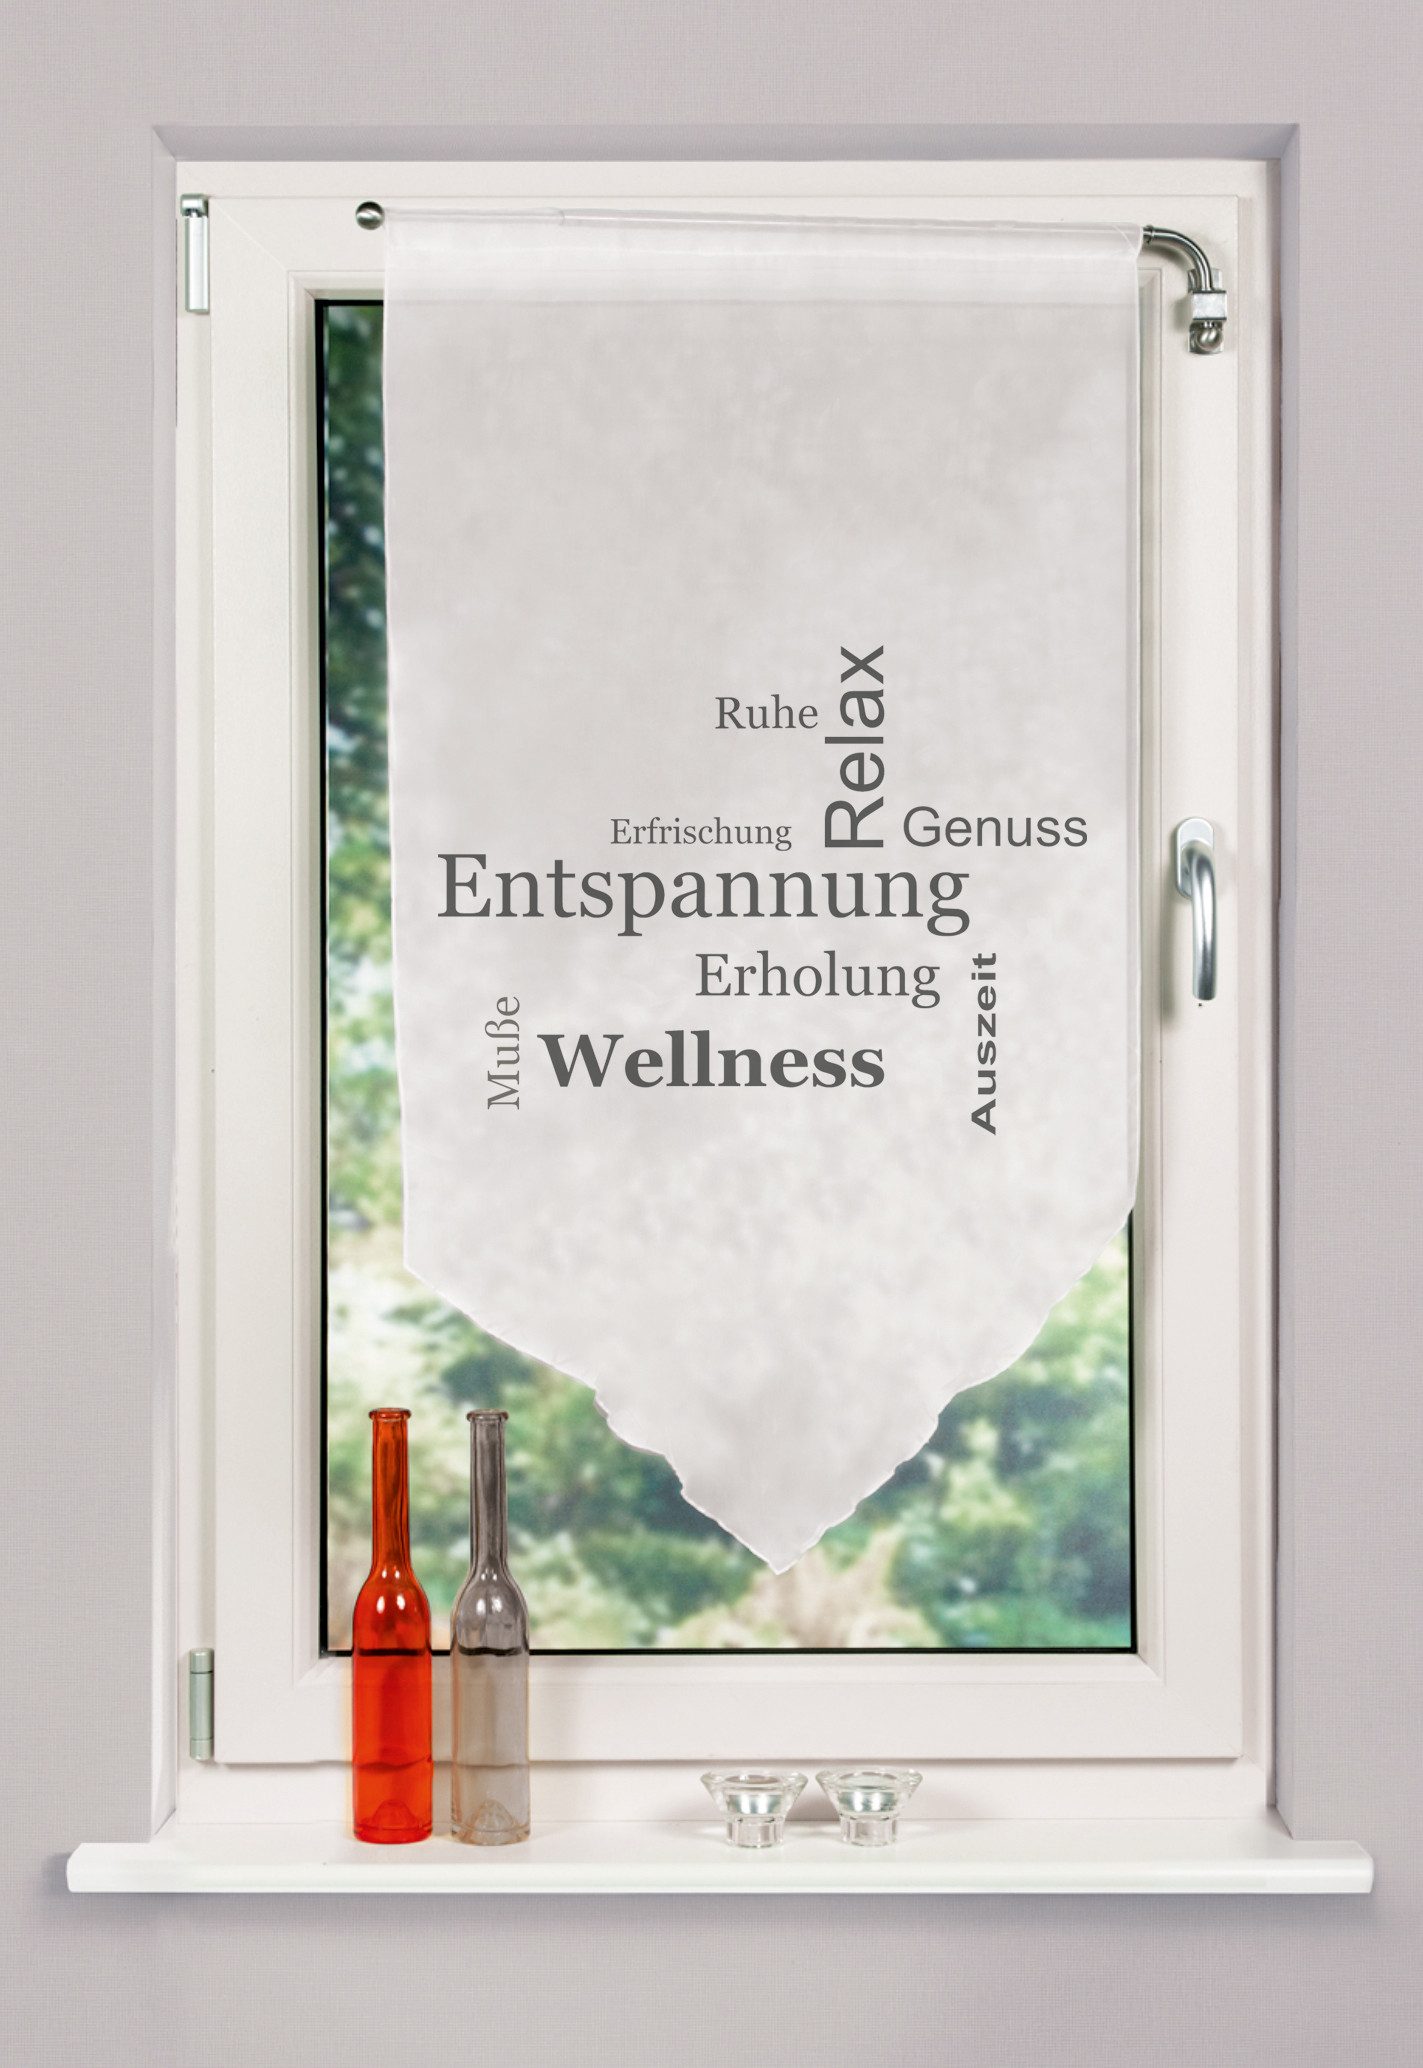 Scheibengardine Fensterbehang Relax Wellness, Clever-Kauf-24, Stangendurchzug, transparent